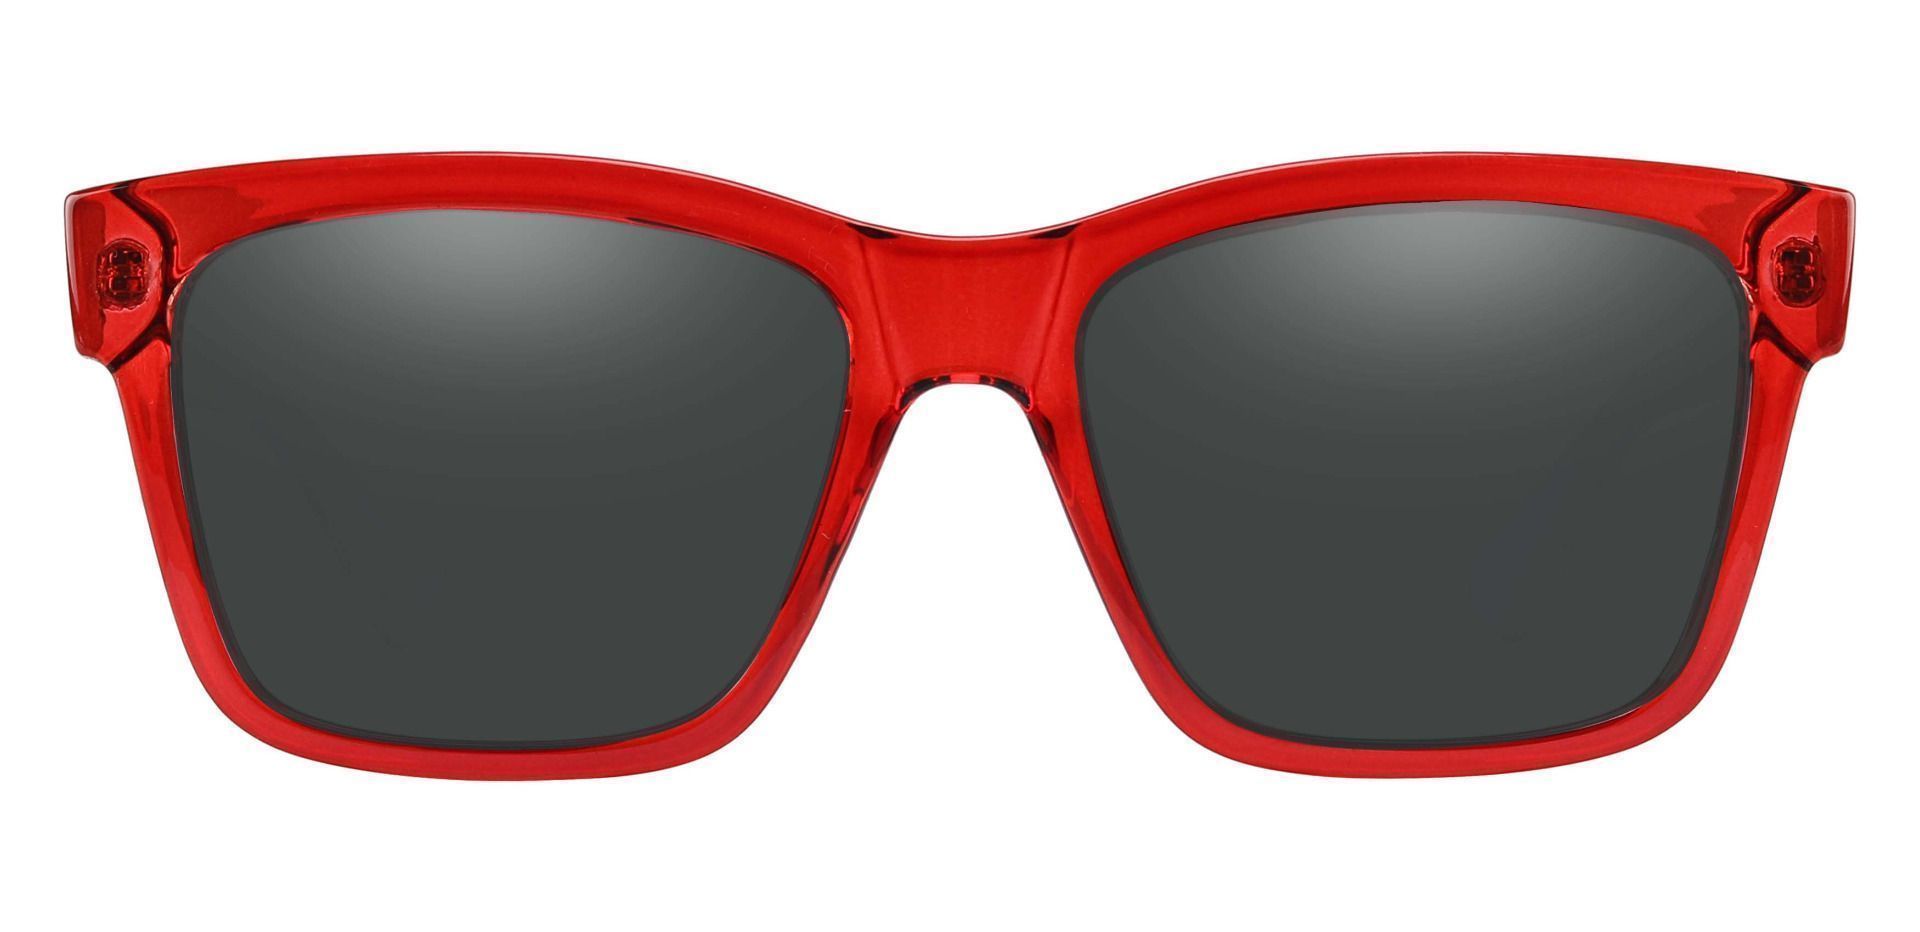 Brinley Square Prescription Sunglasses - Red Frame With Gray Lenses